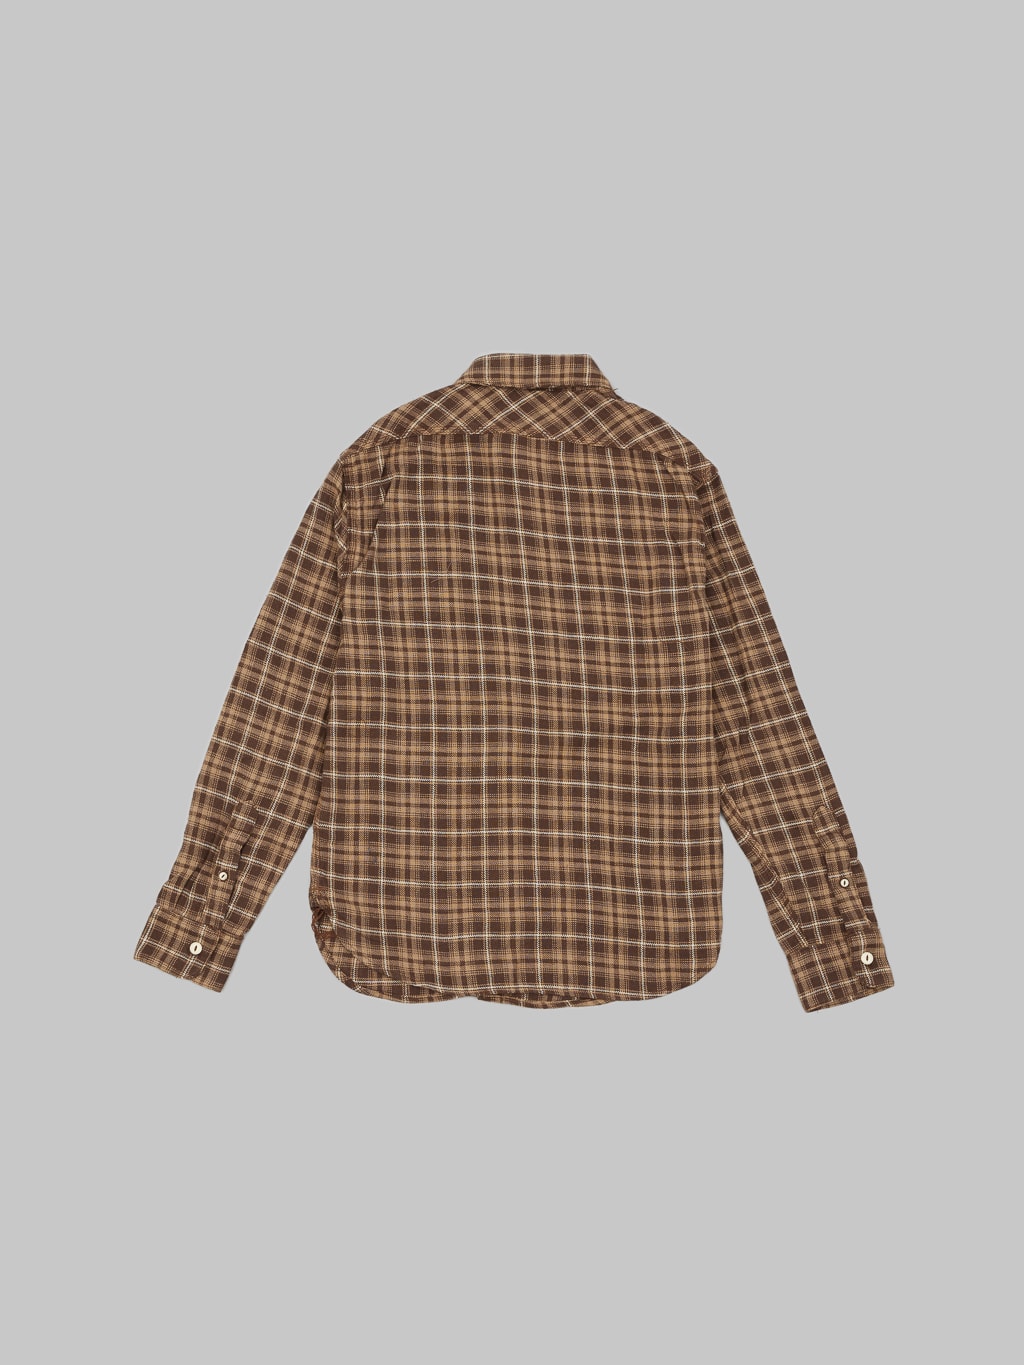 Freenote Cloth Wells Shirt Brown back 100 cotton